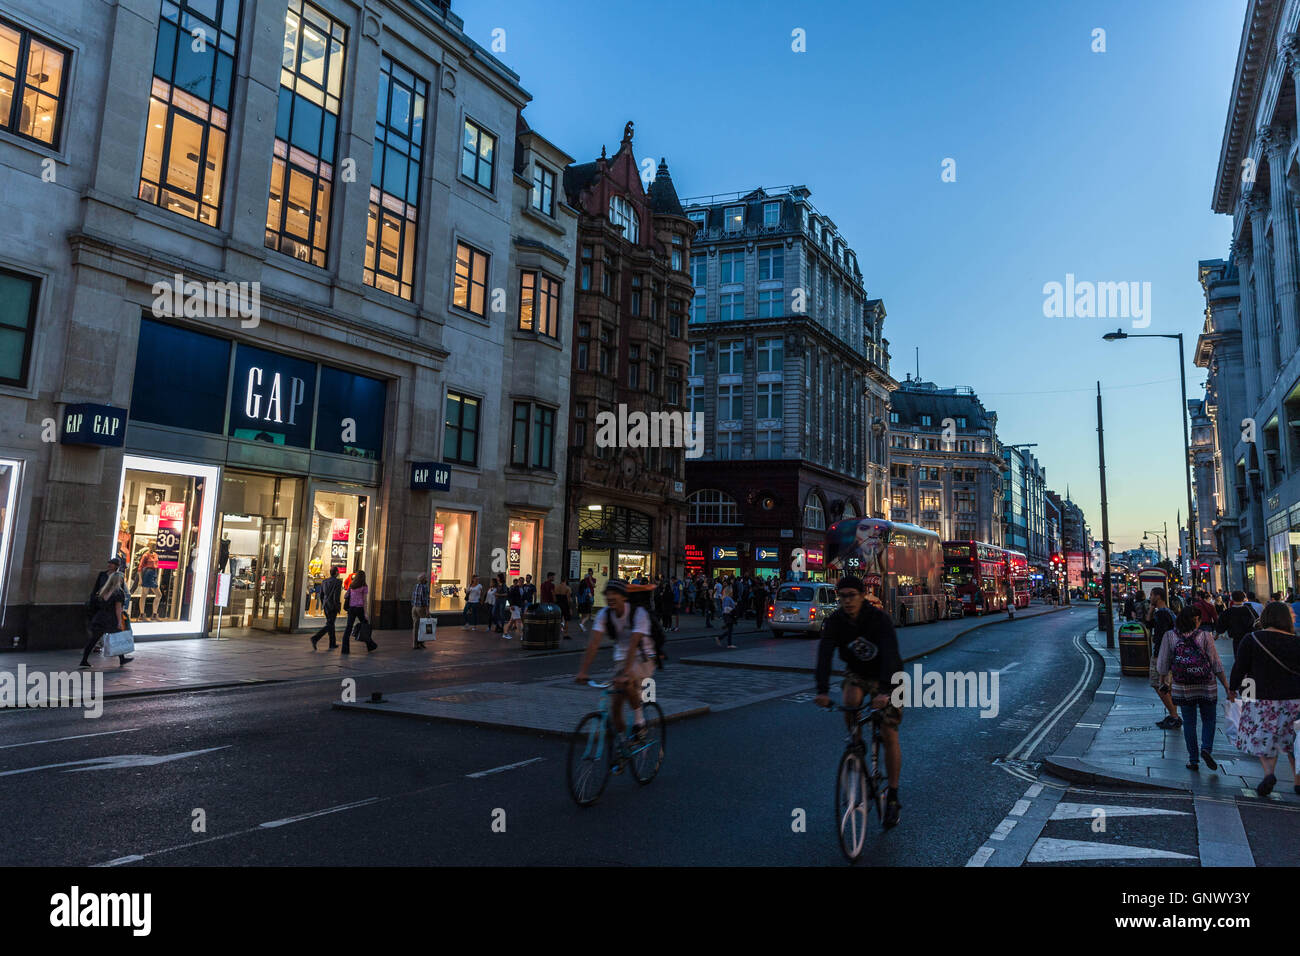 Oxford street scene at dusk, London, England, UK. Stock Photo